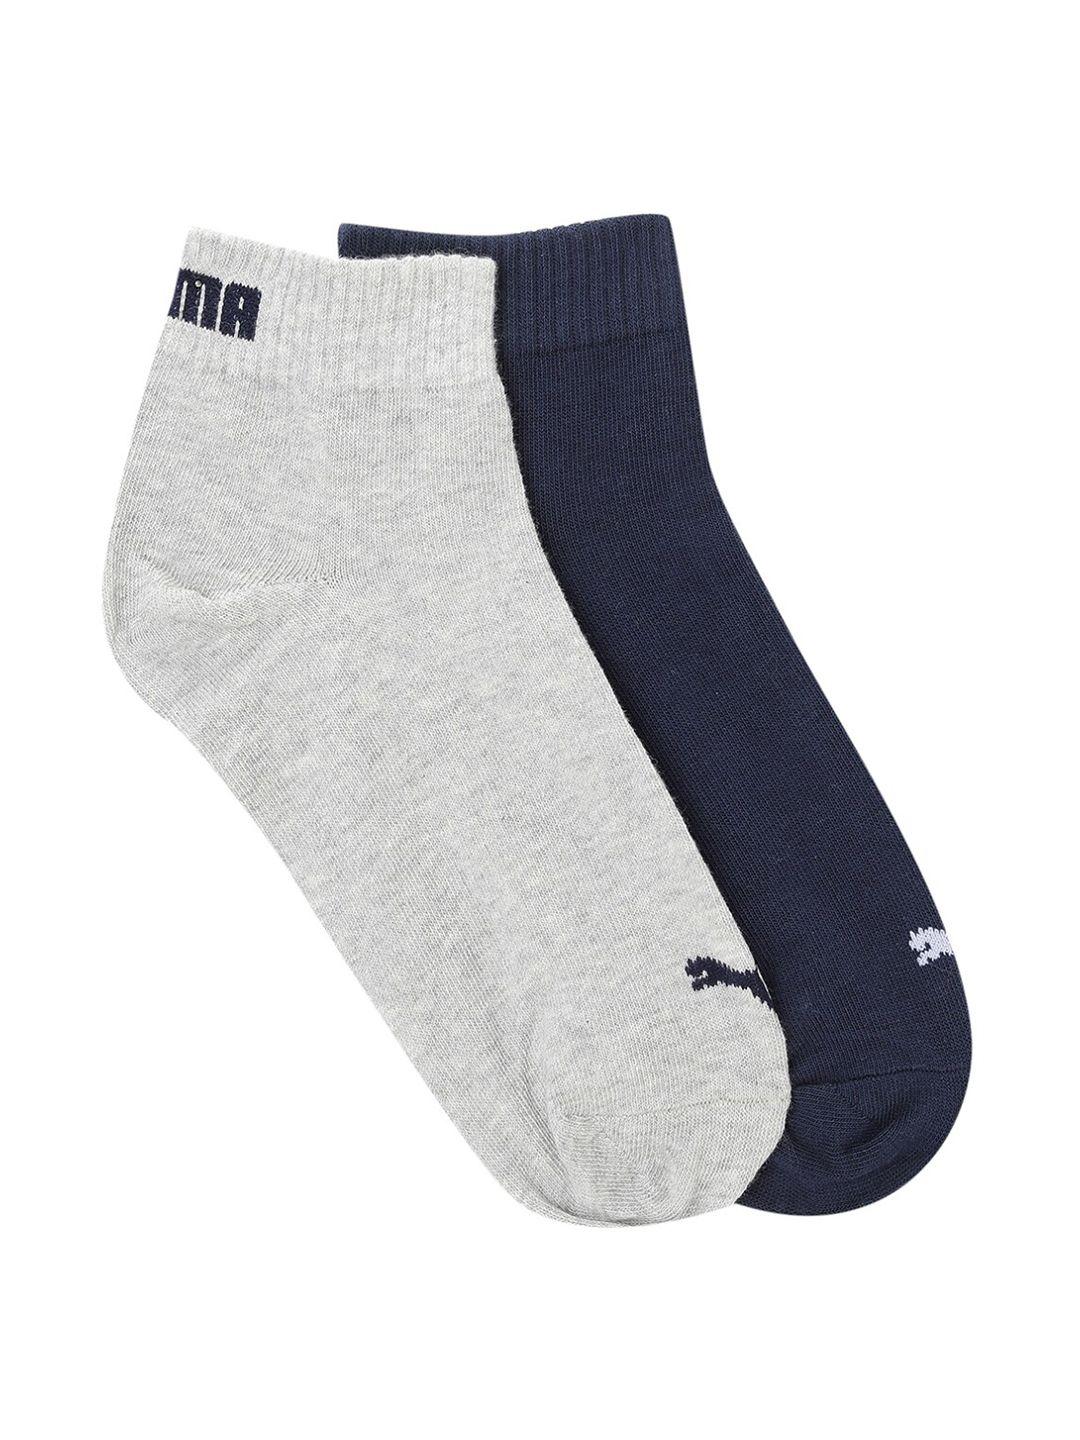 puma unisex navy blue & grey pack of 2 ankle length socks